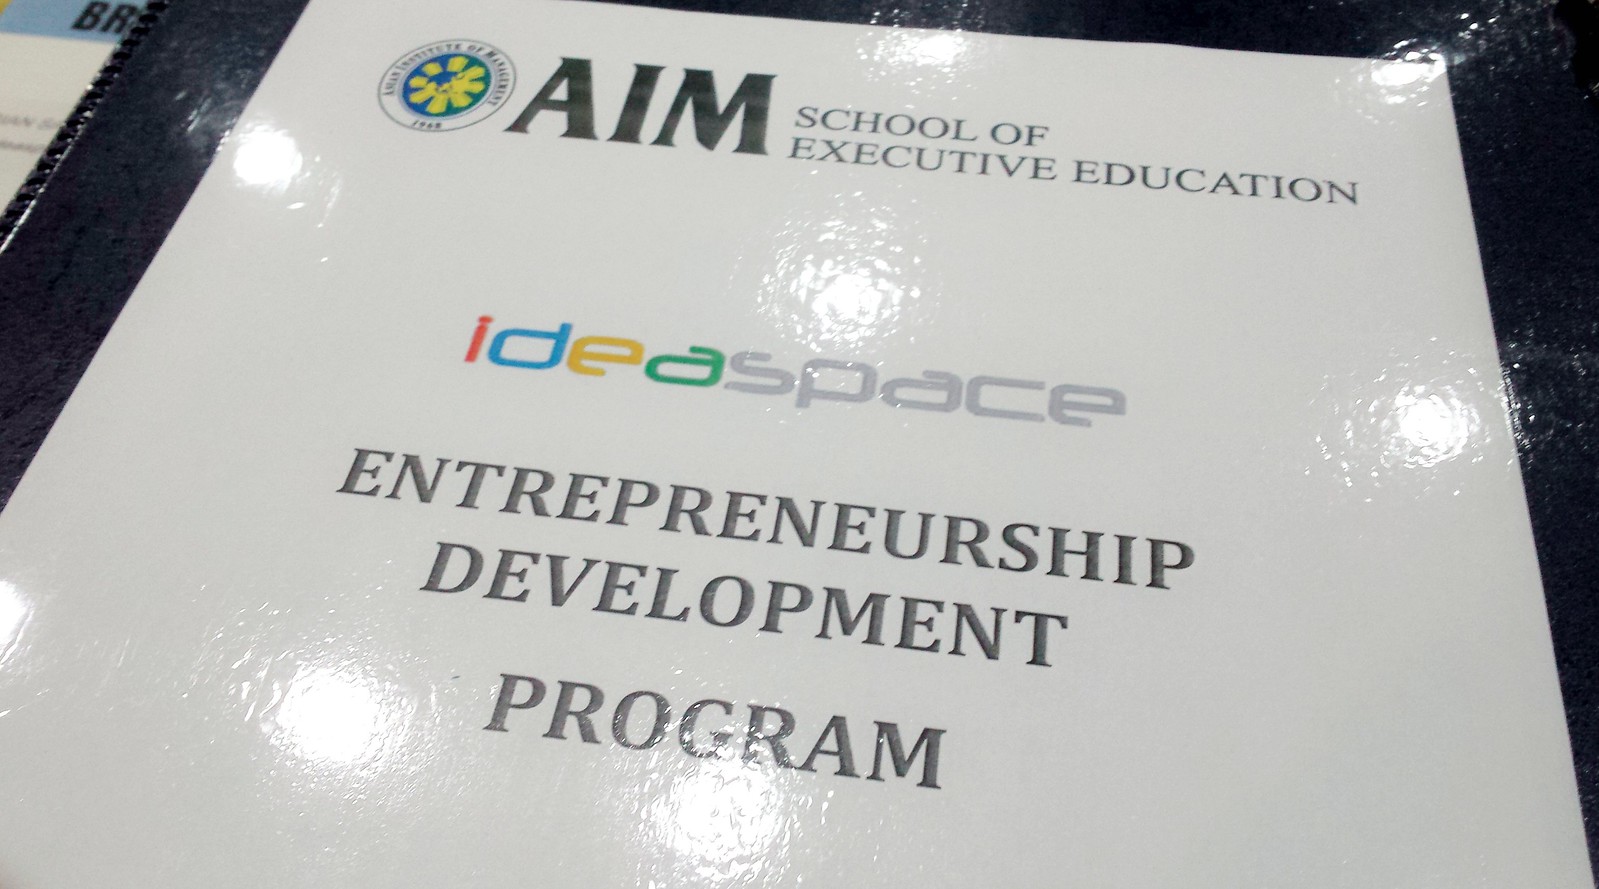 AIM - Ideaspace Entrepreneurship Development Program